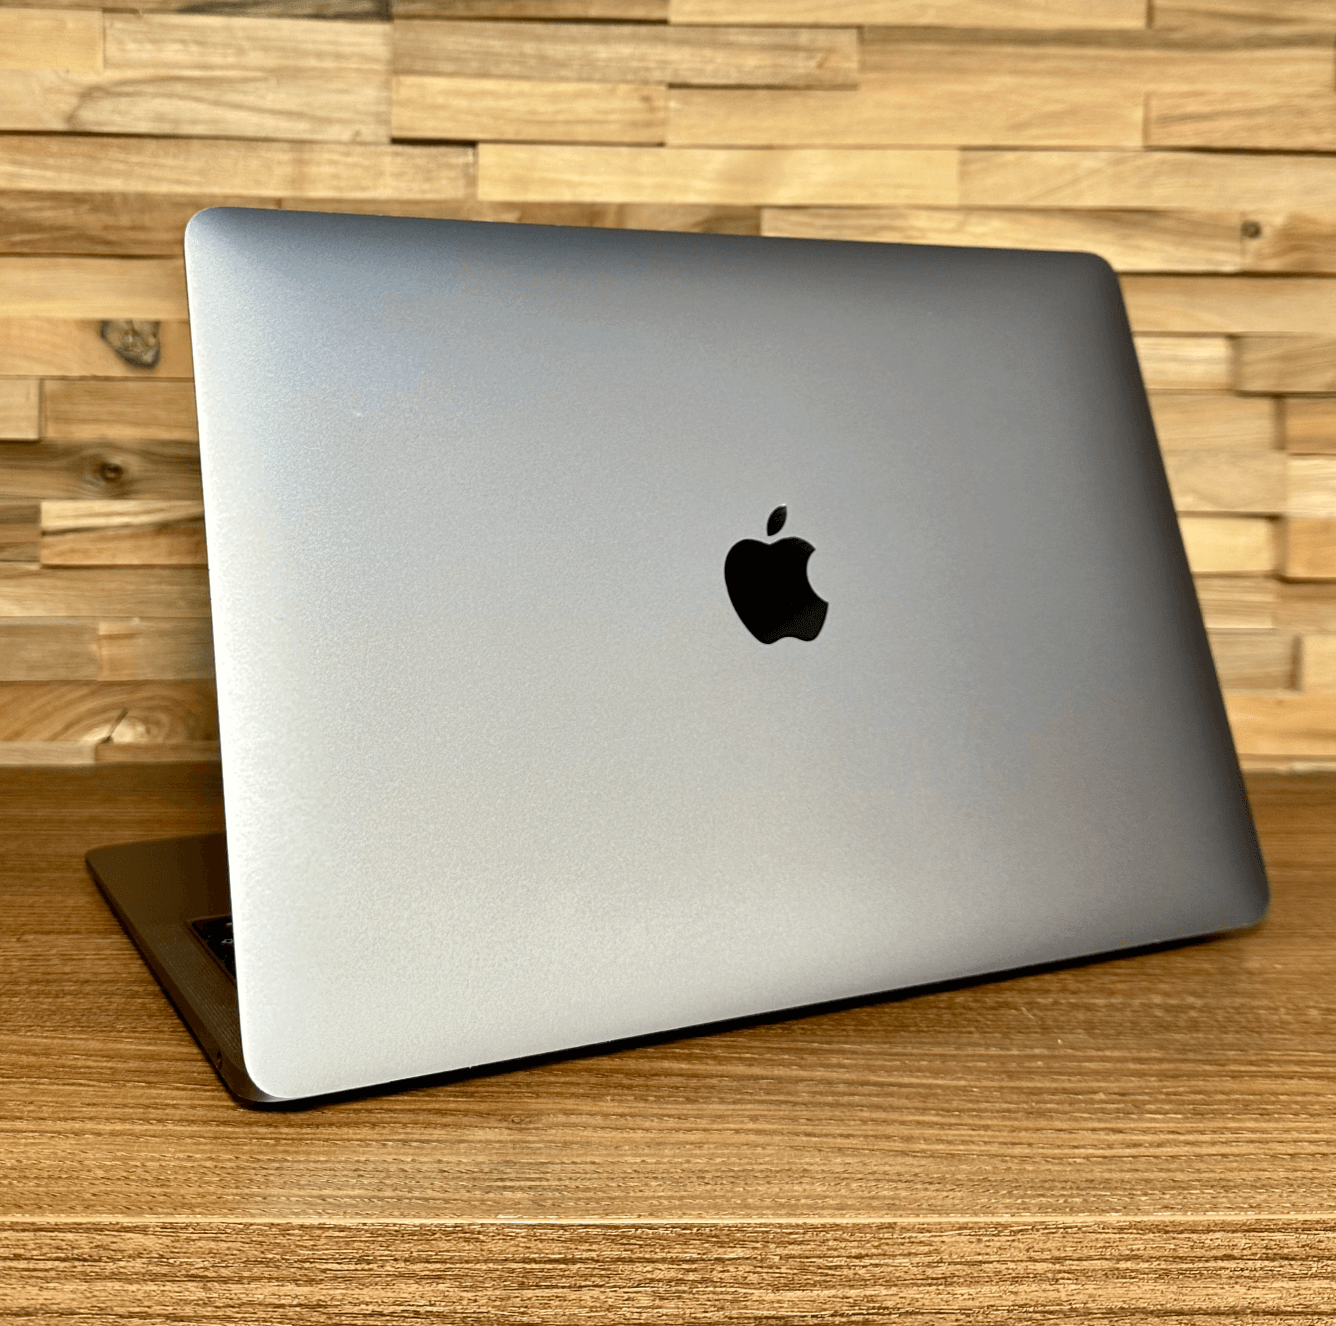 MacBook Air 13", rok 2018, i5, 8GB RAM, 128GB SSD